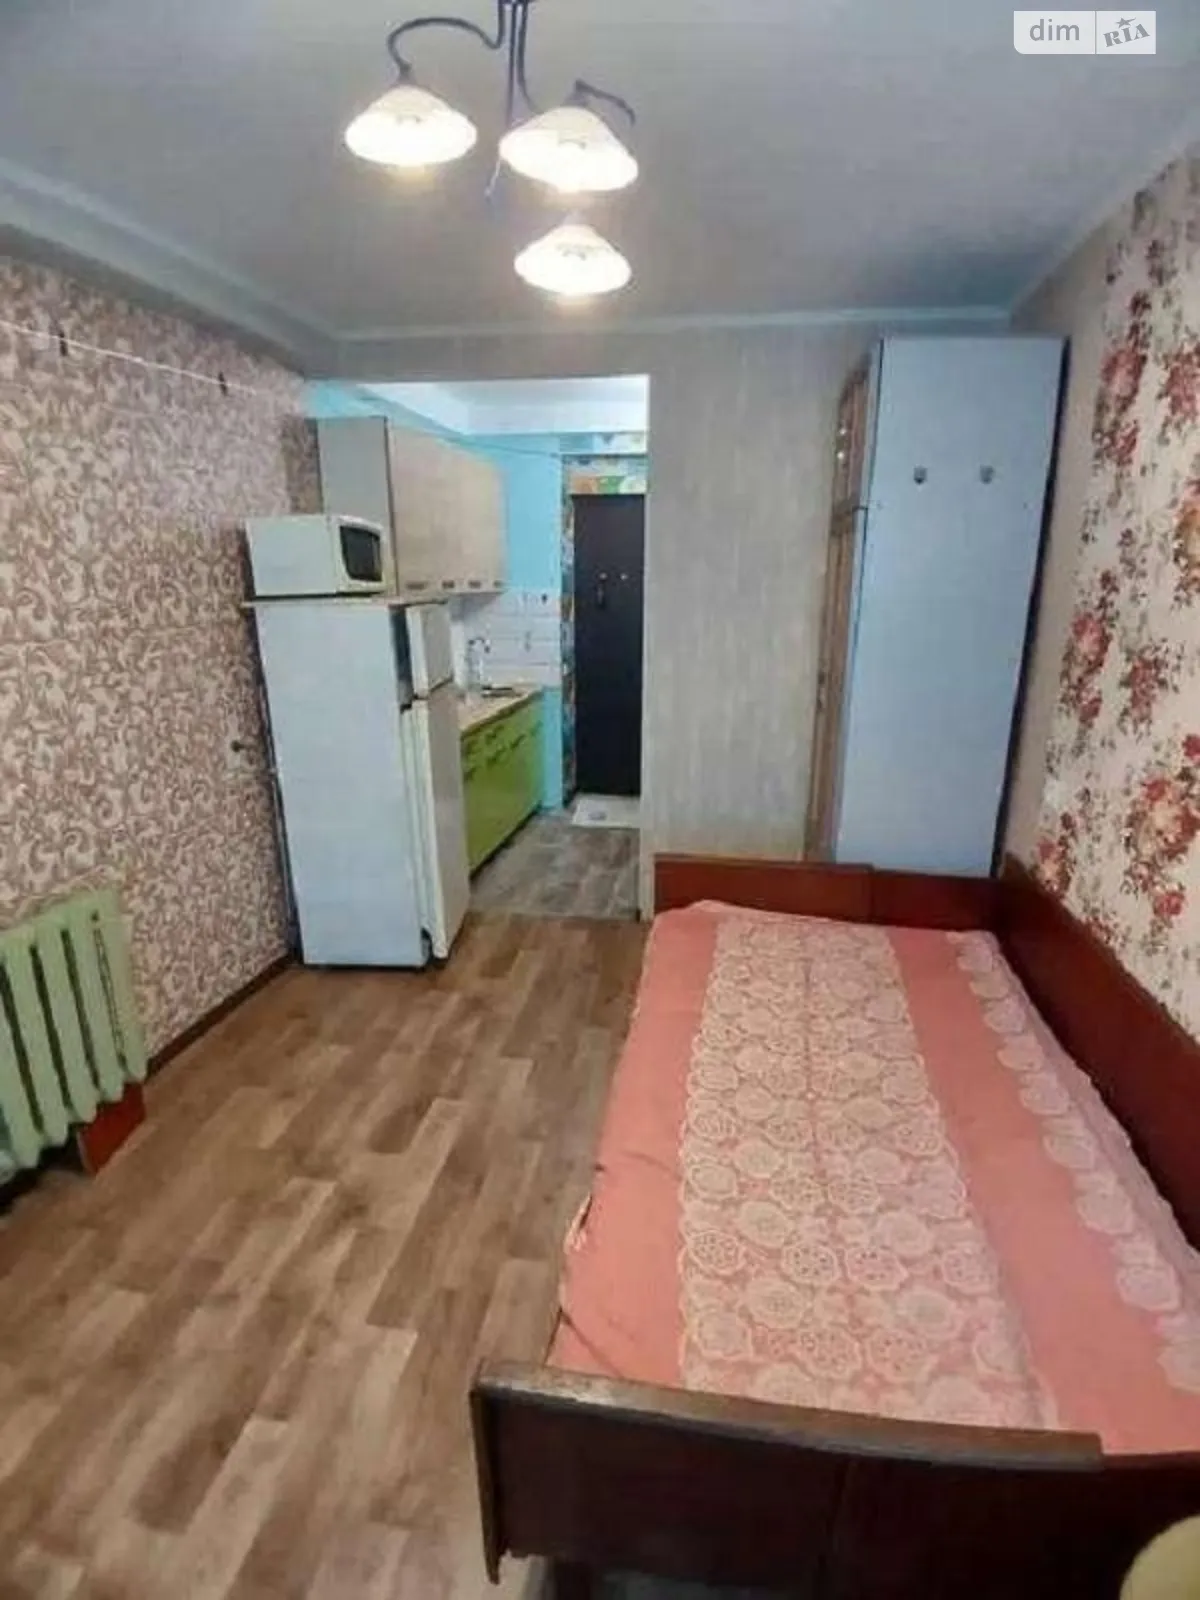 Продается комната 18 кв. м в Харькове - фото 2